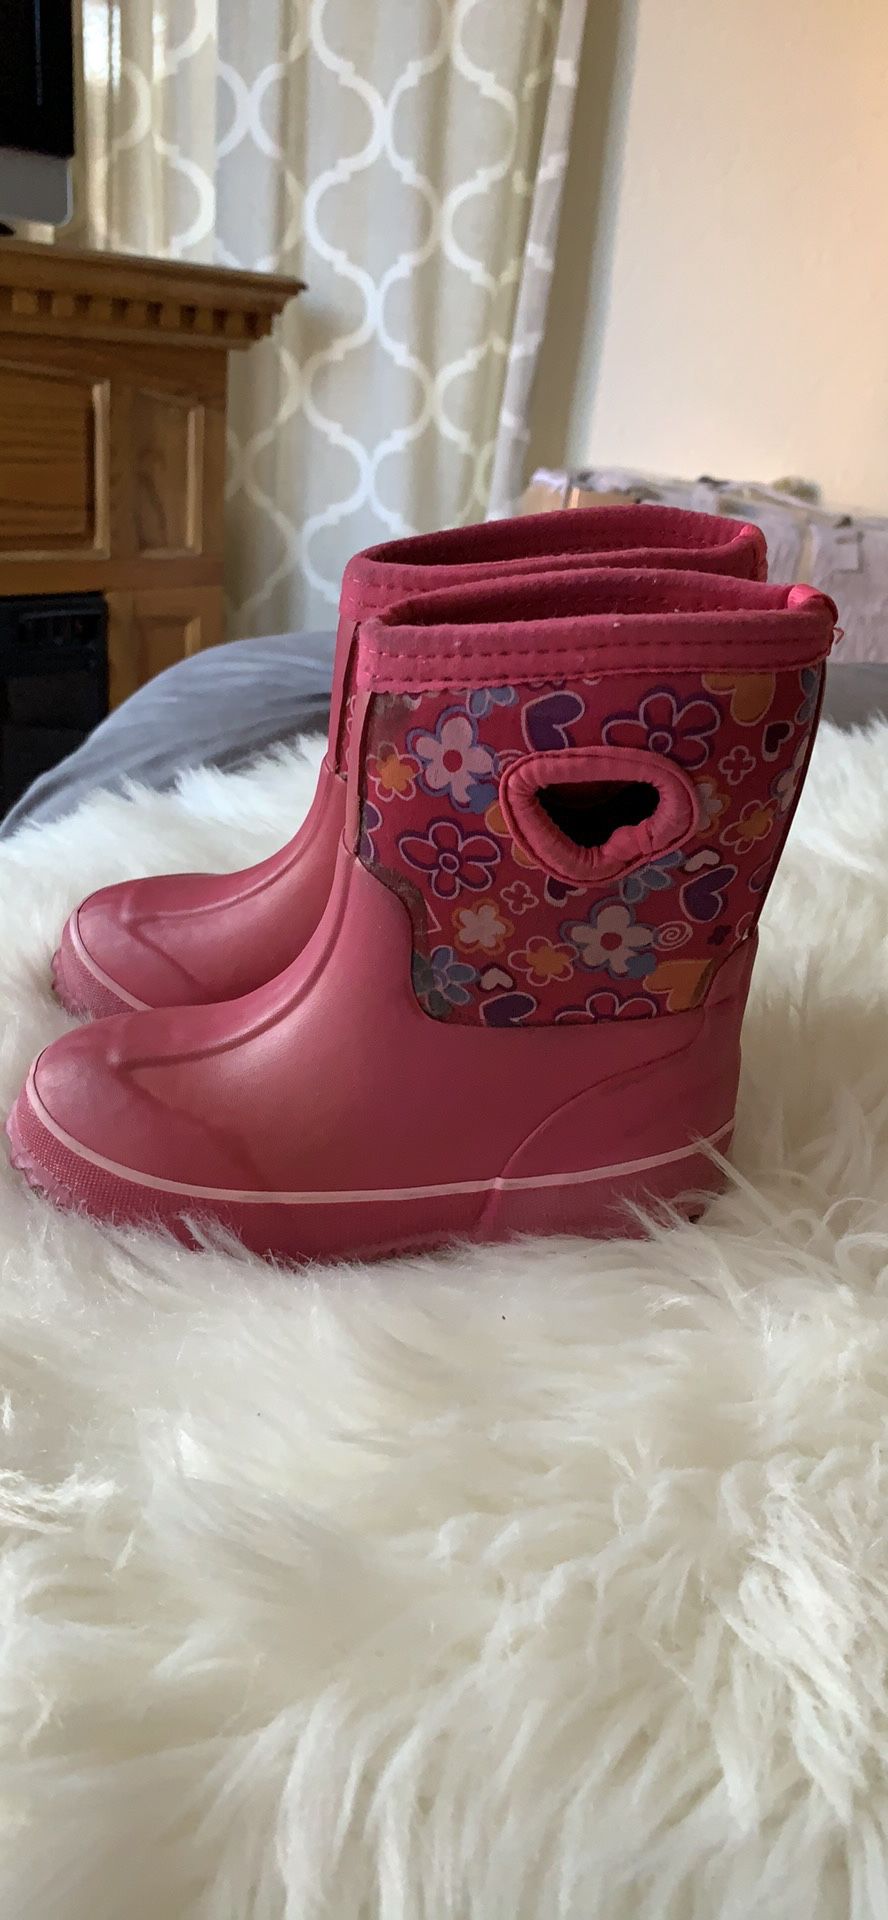 Toddler girl rain boots size 11/12